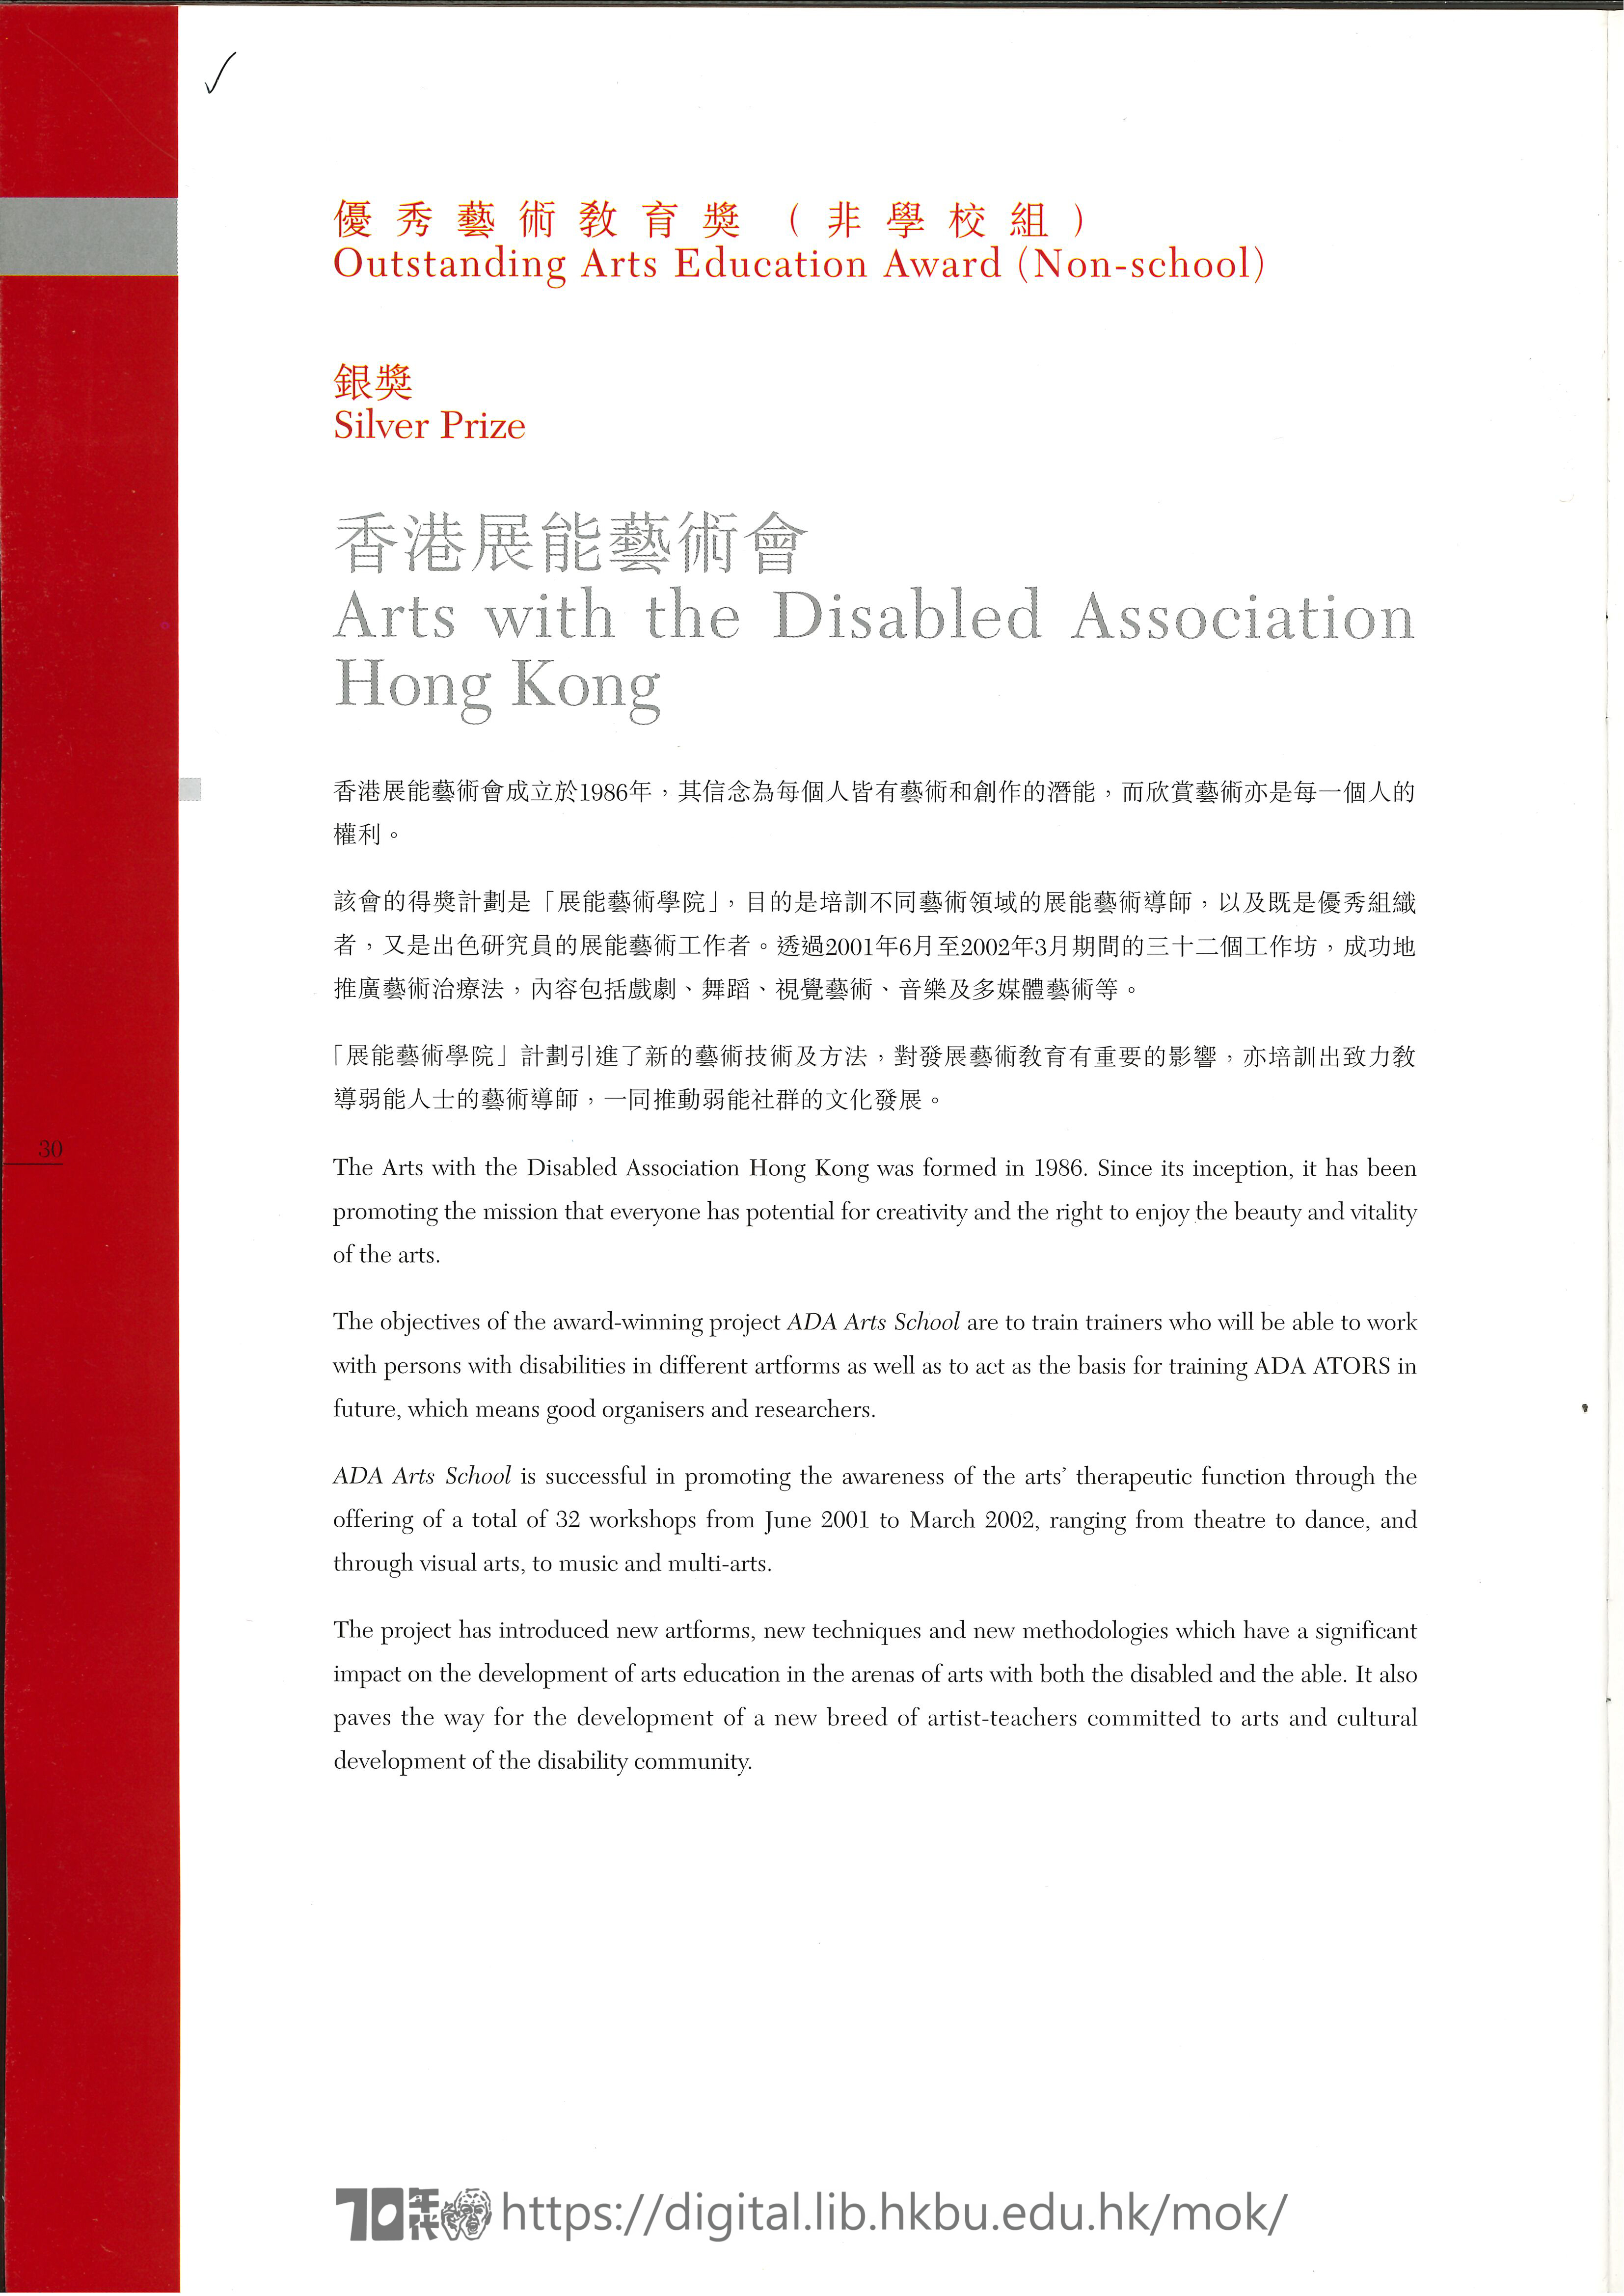   House programme of Hong Kong Arts Development Award (award to Arts with the Disabled Association)  